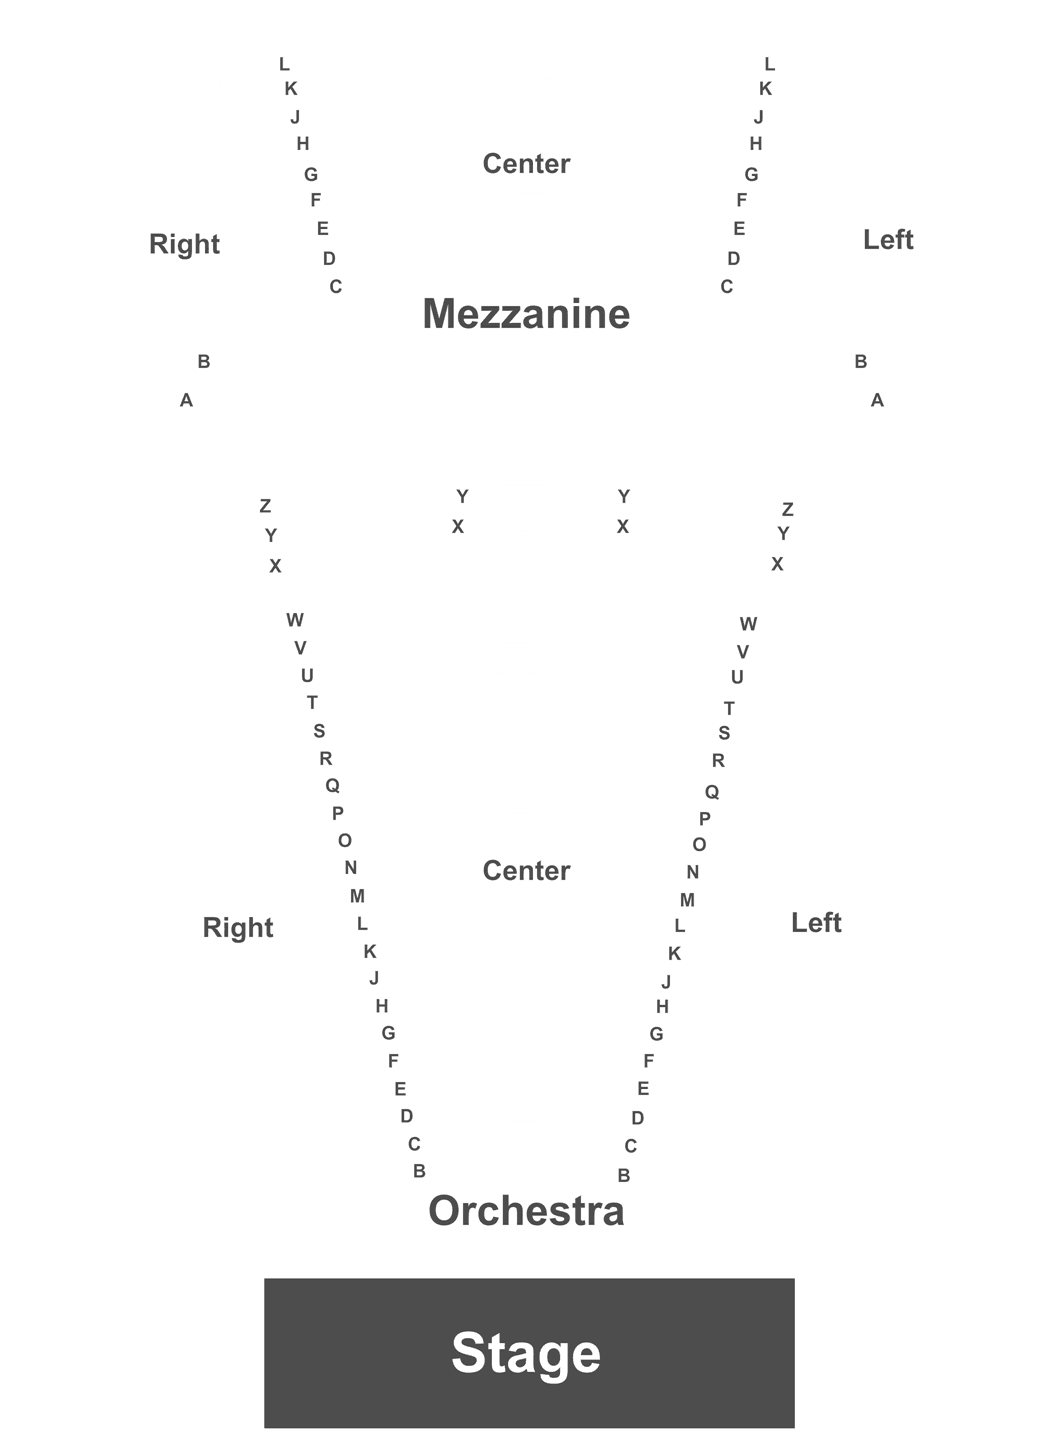 Wynn Encore Theater Seating Chart